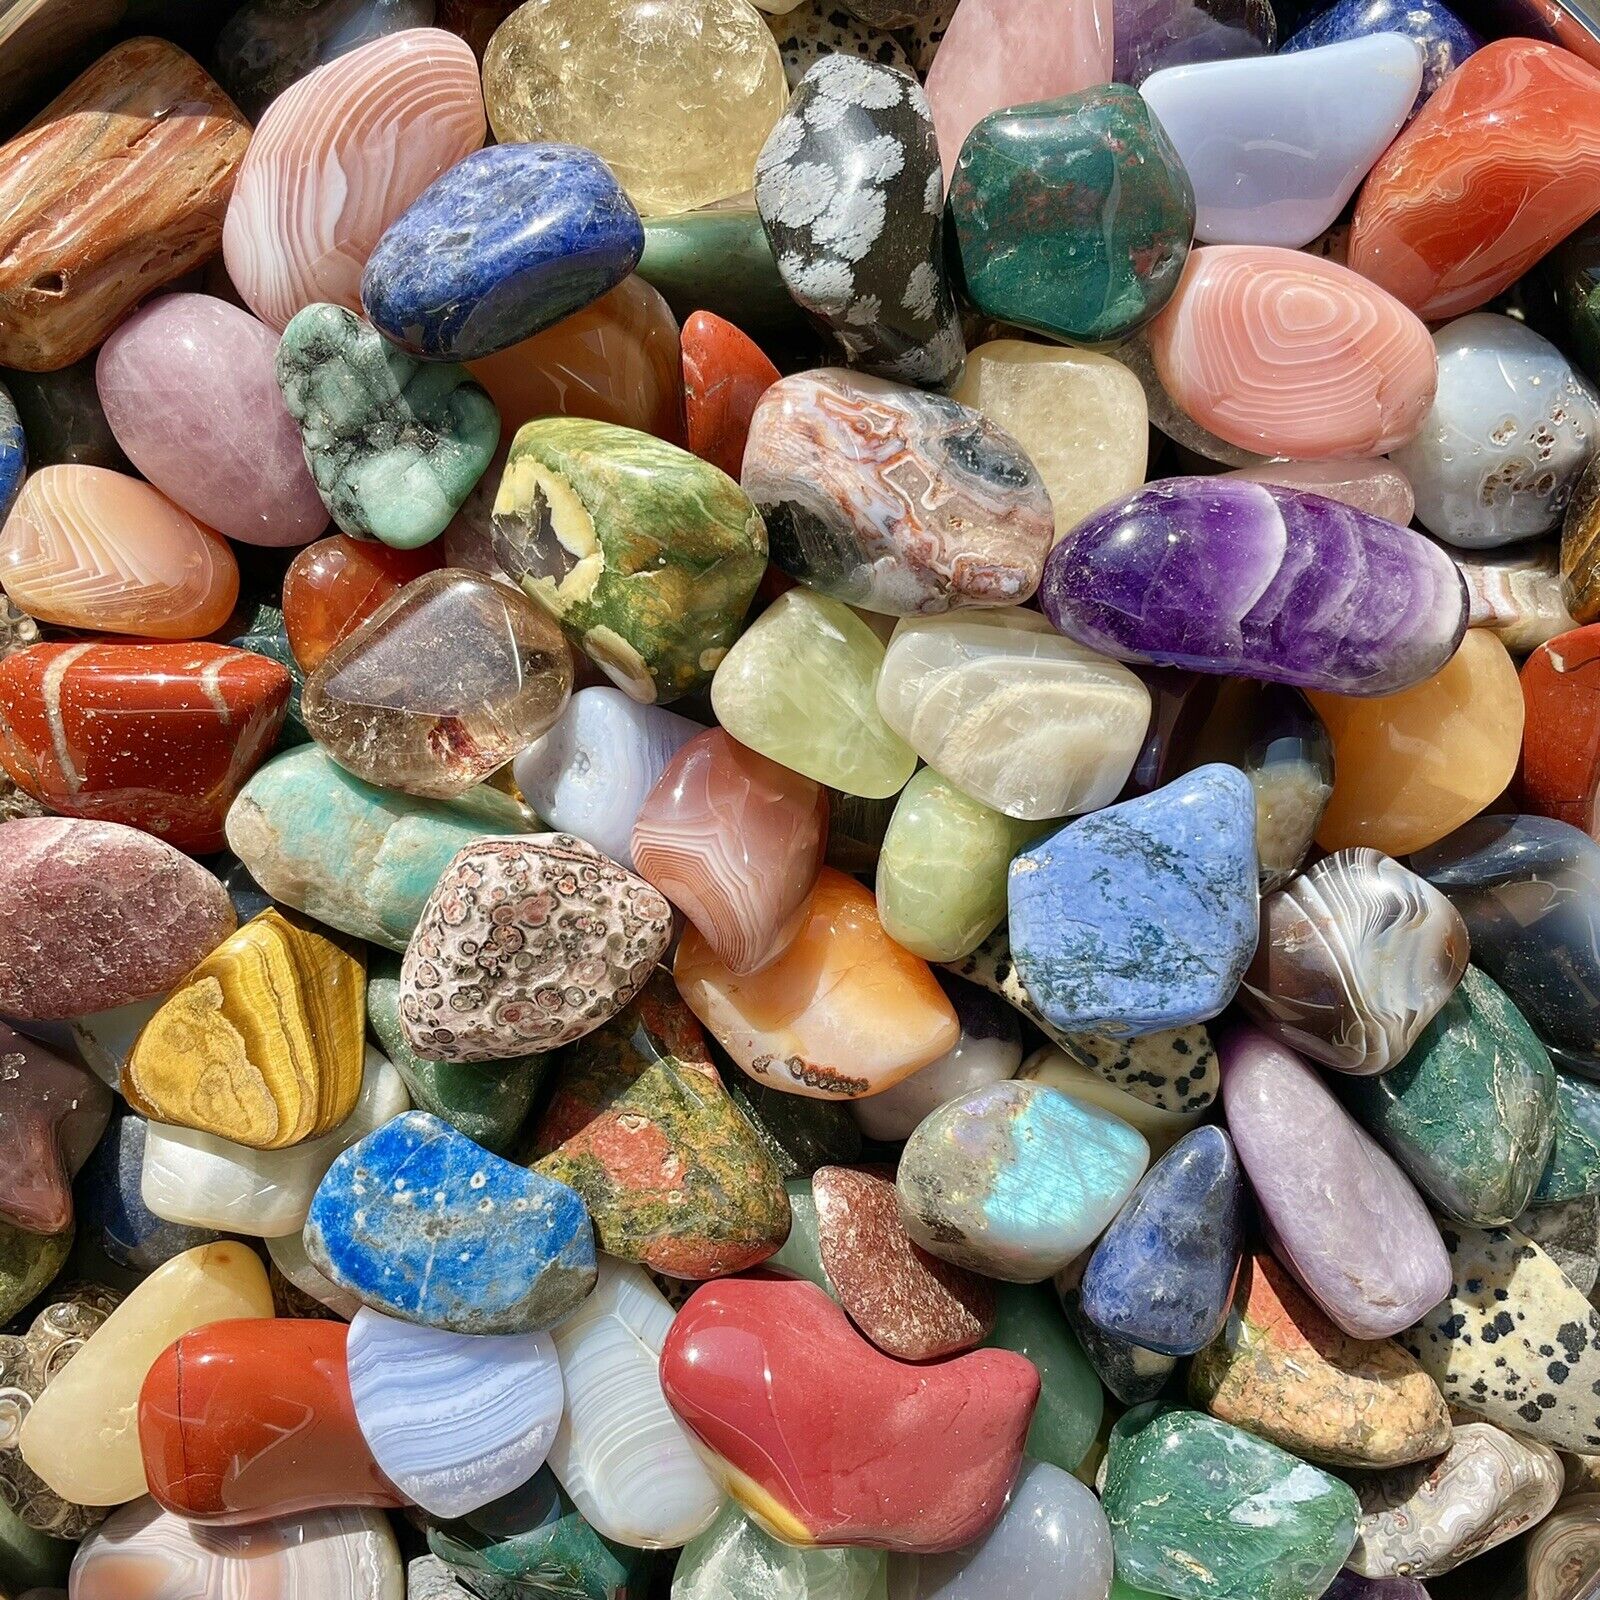 3lb JUMBO Lot Polished Rocks - Tumbled Stones Gemstone Mix - Healing and Reiki